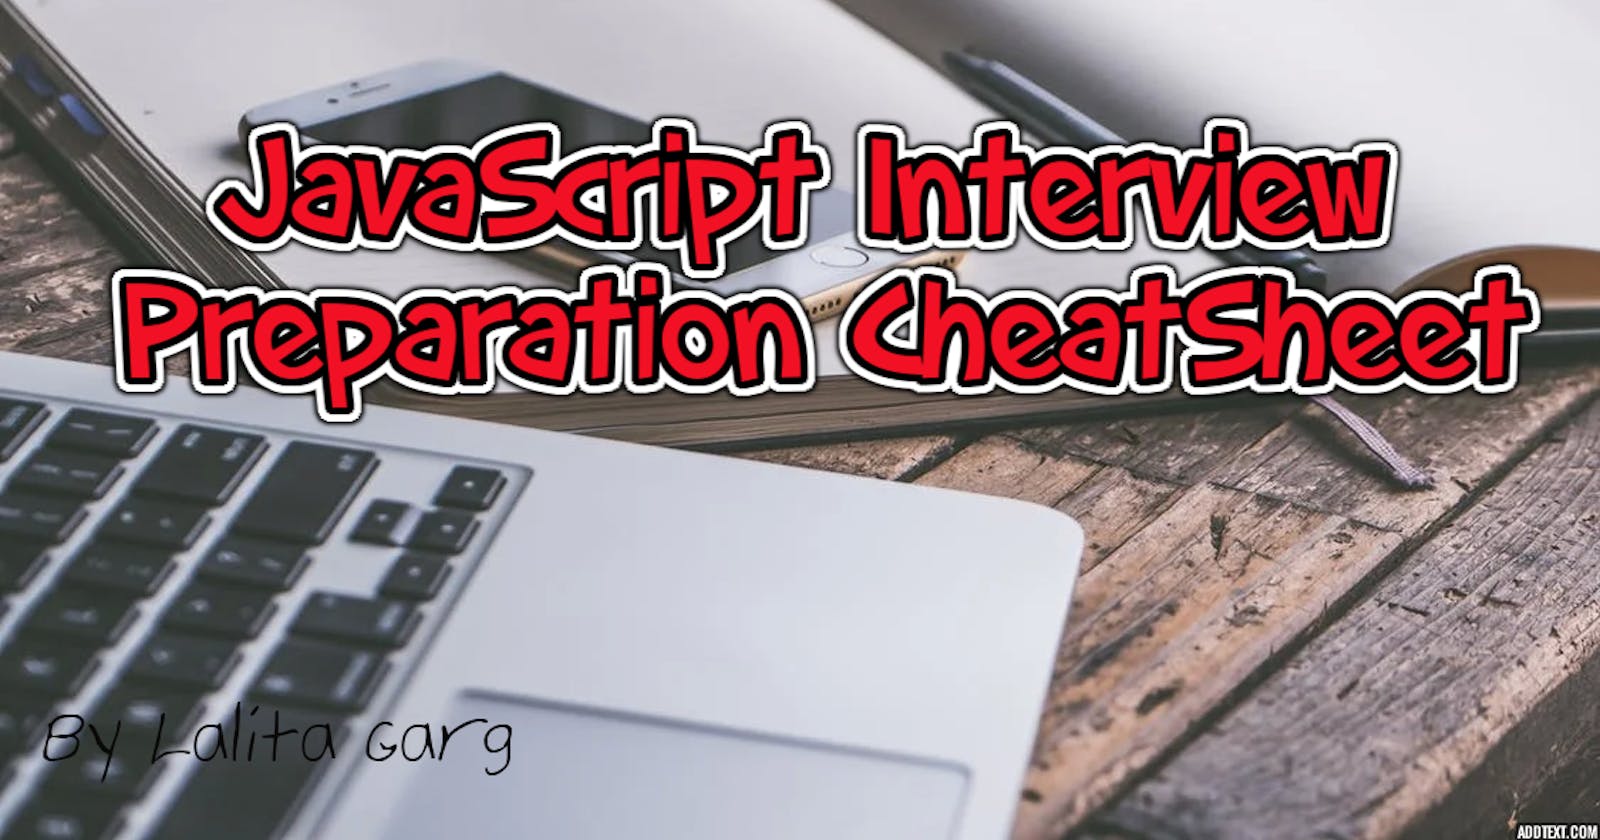 # JavaScript Interview Preparation CheatSheet